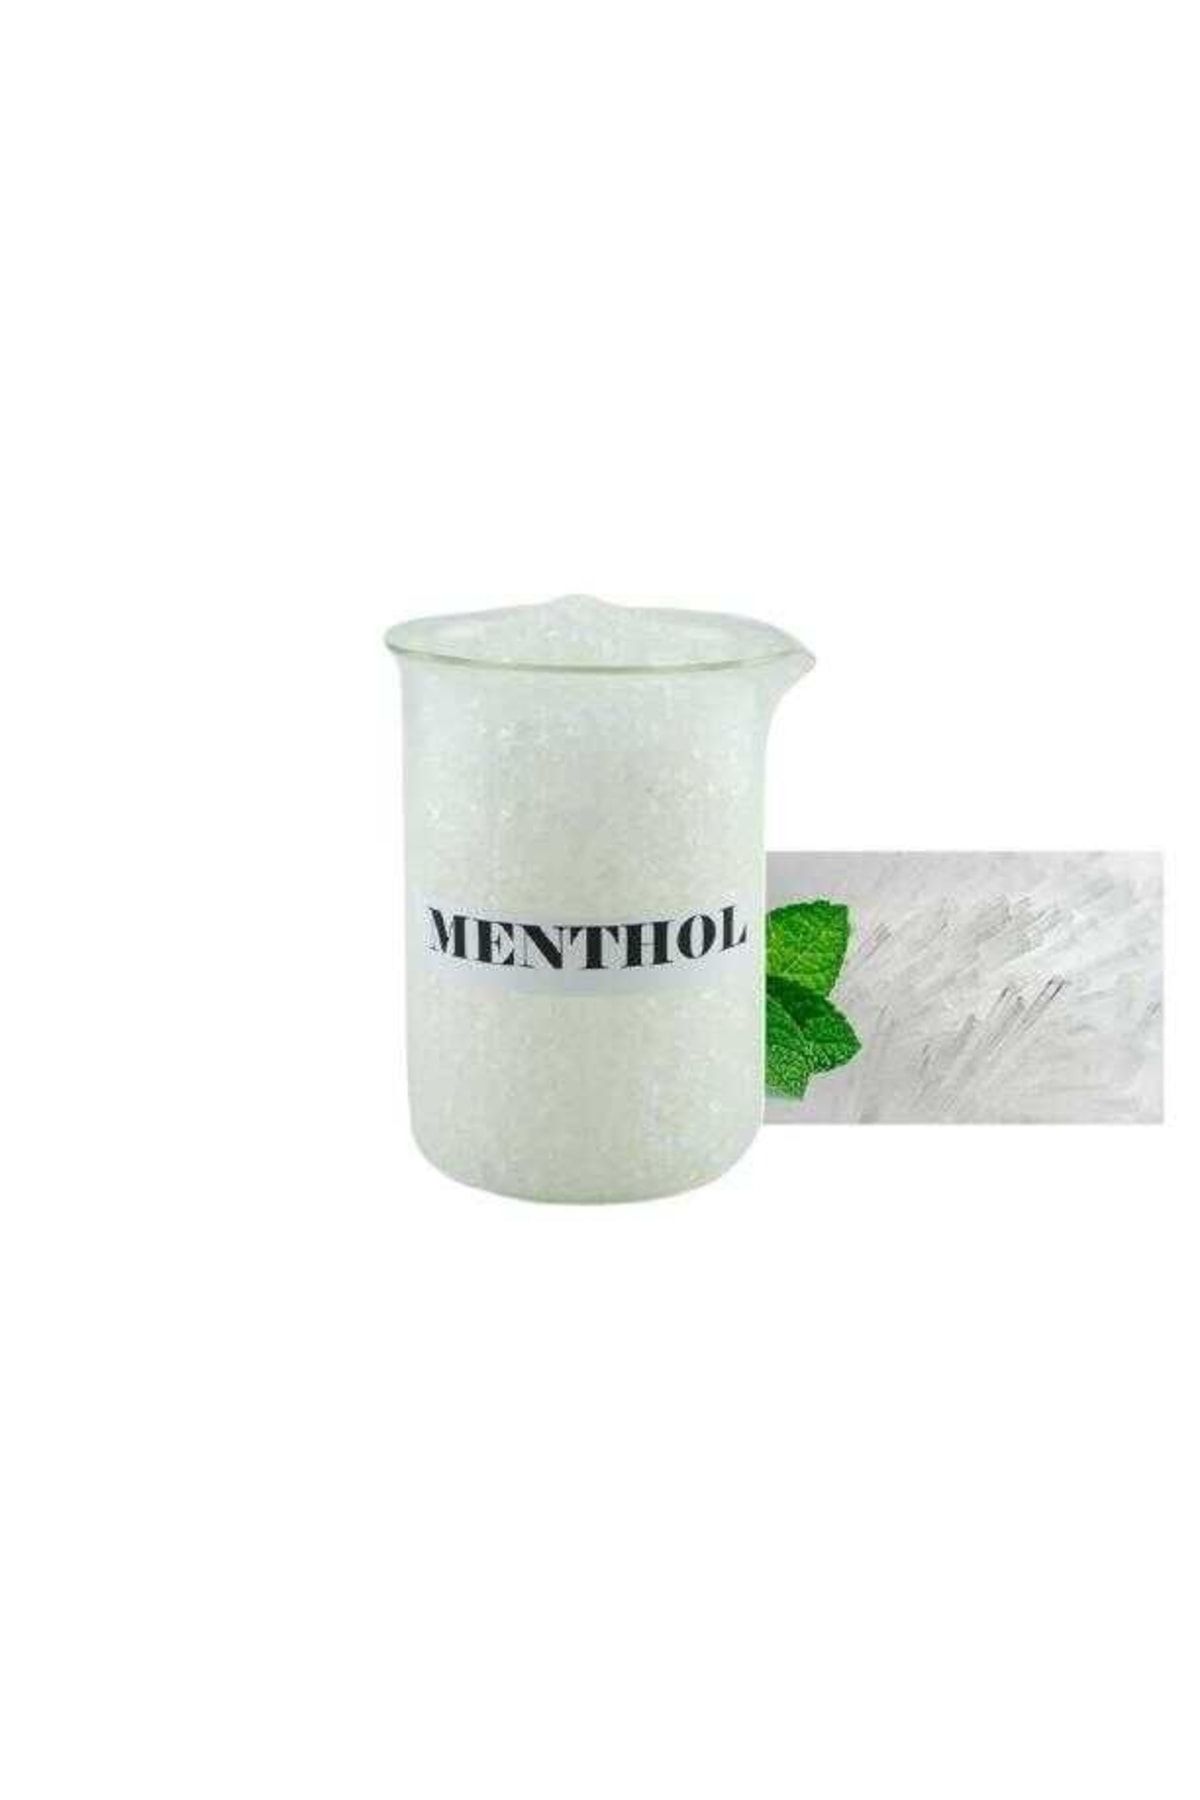 Kimyacınız Kristal Mentol Menthol - Hamam, Sauna, Buhar 100 GR, Saf Mentol, Kozmetik Mentol